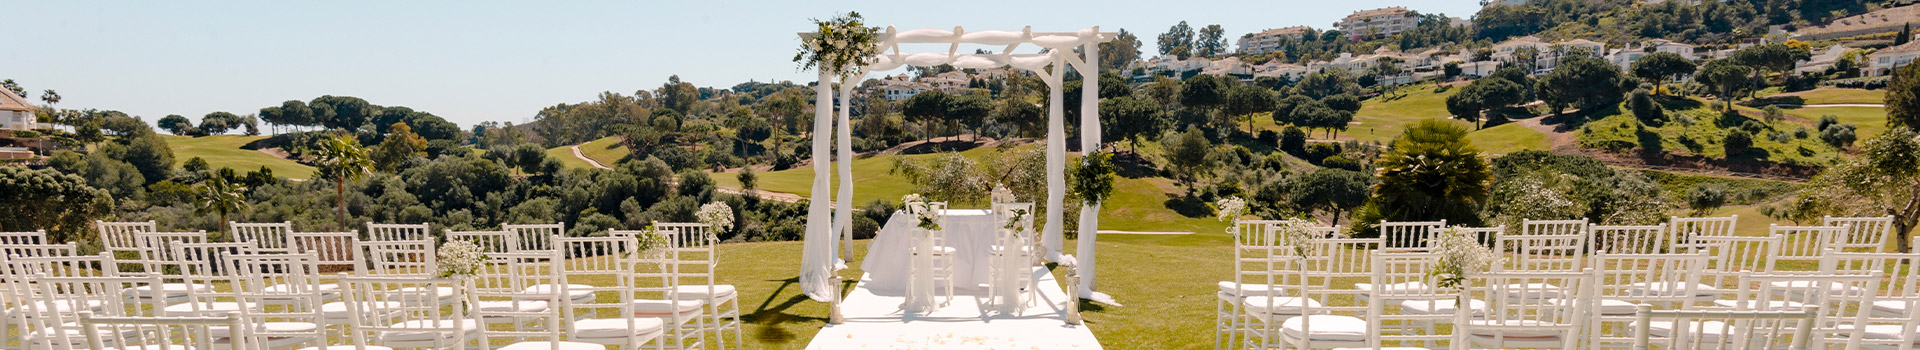 Weddings in Spain at La Cala Resort